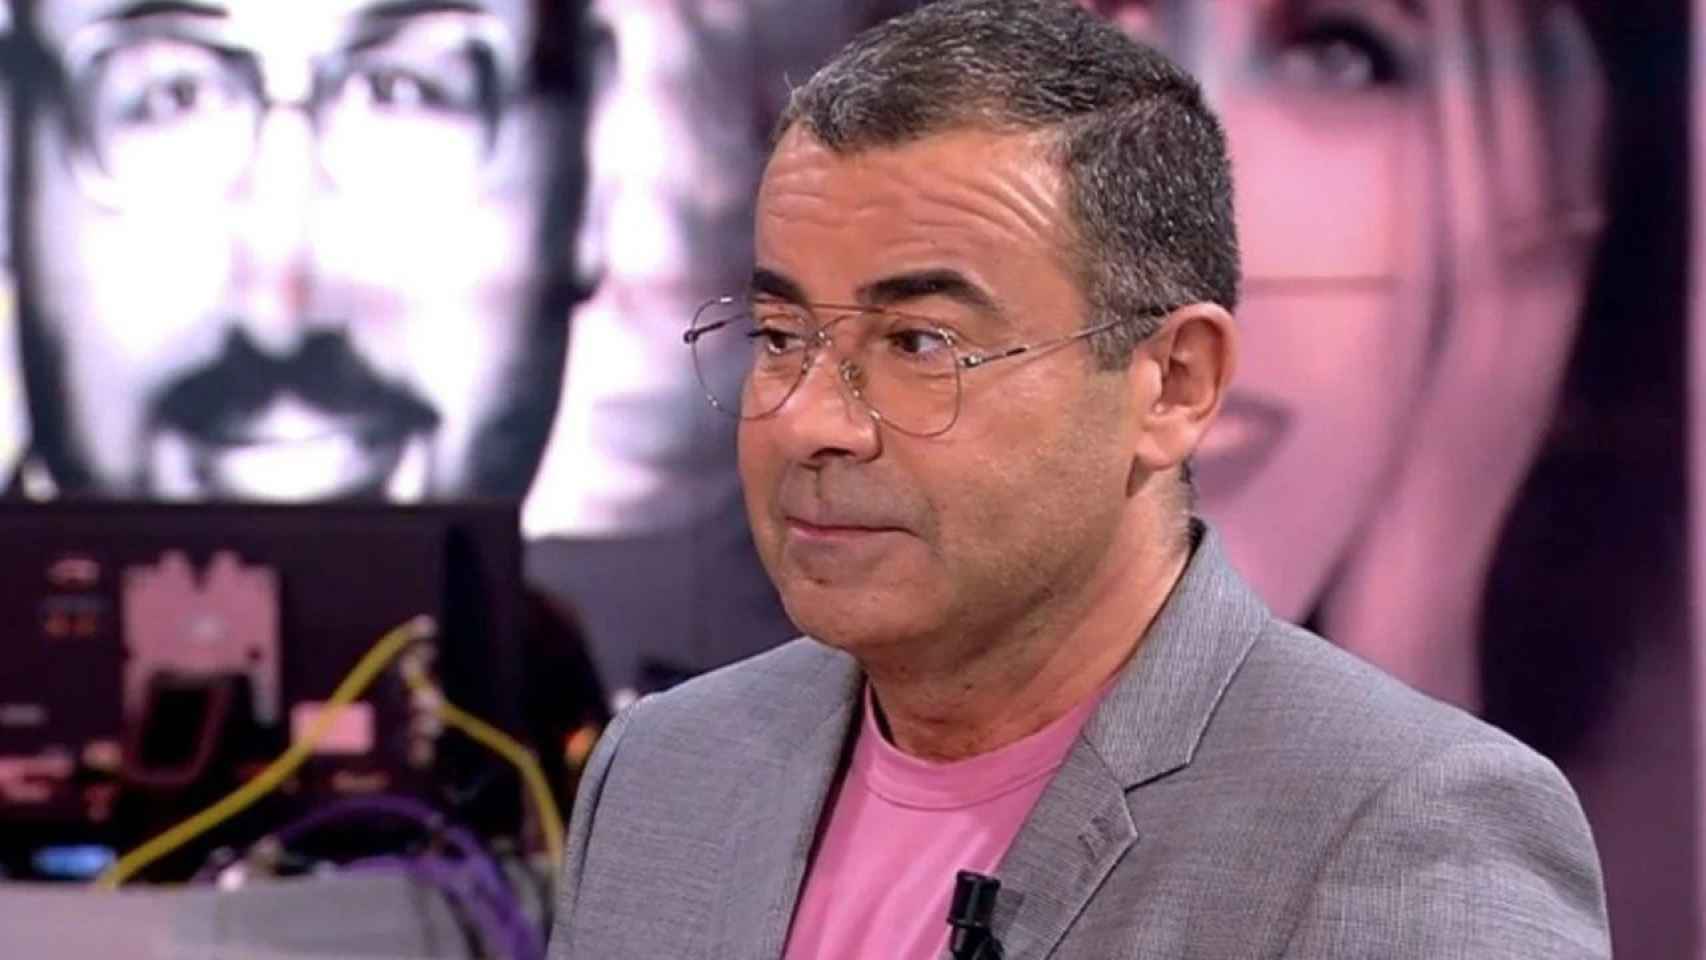 El presentador Jorge Javier Vázquez en 'Sálvame' / MEDIASET